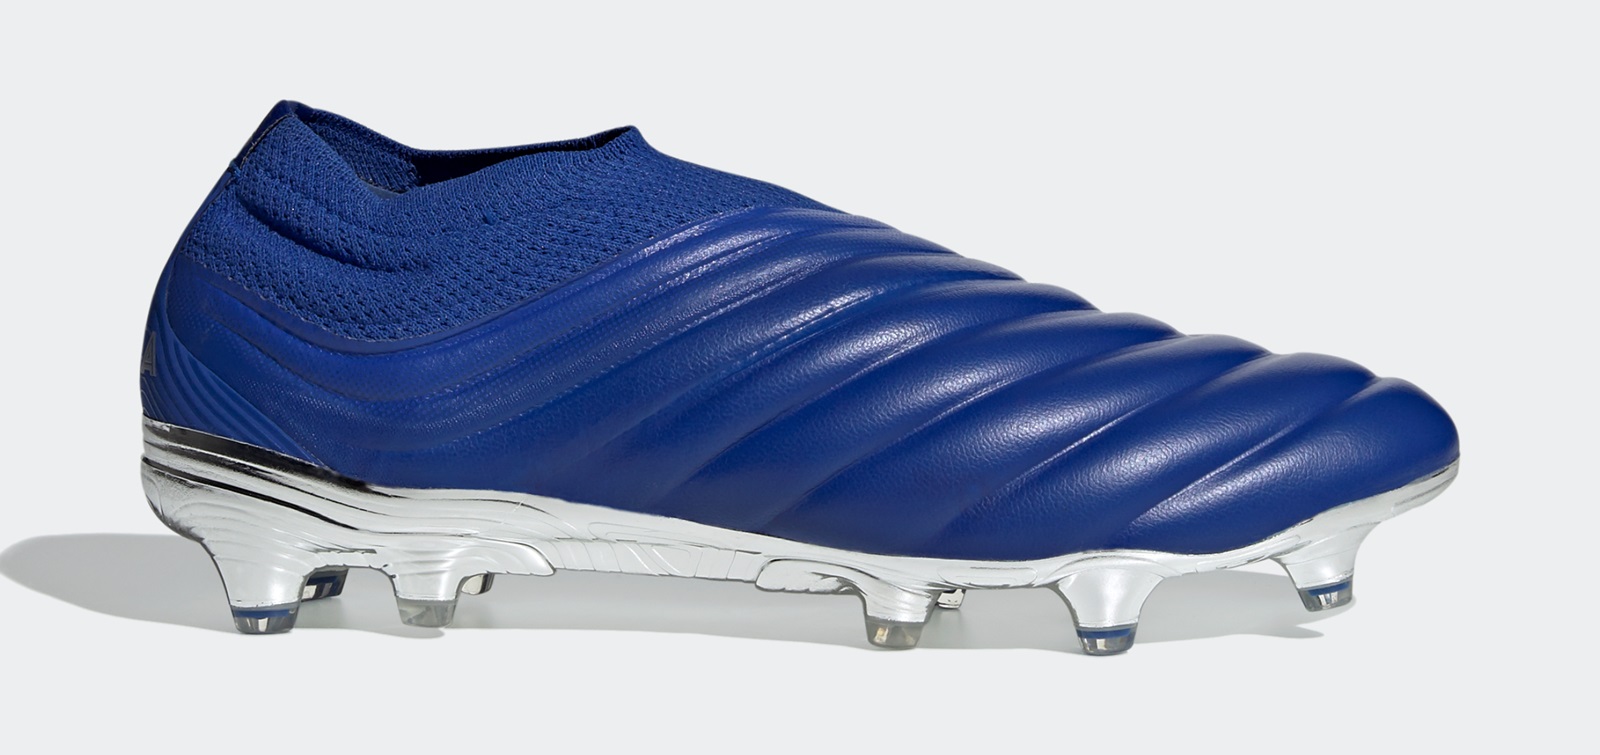 Paulo Dybala Football Boots